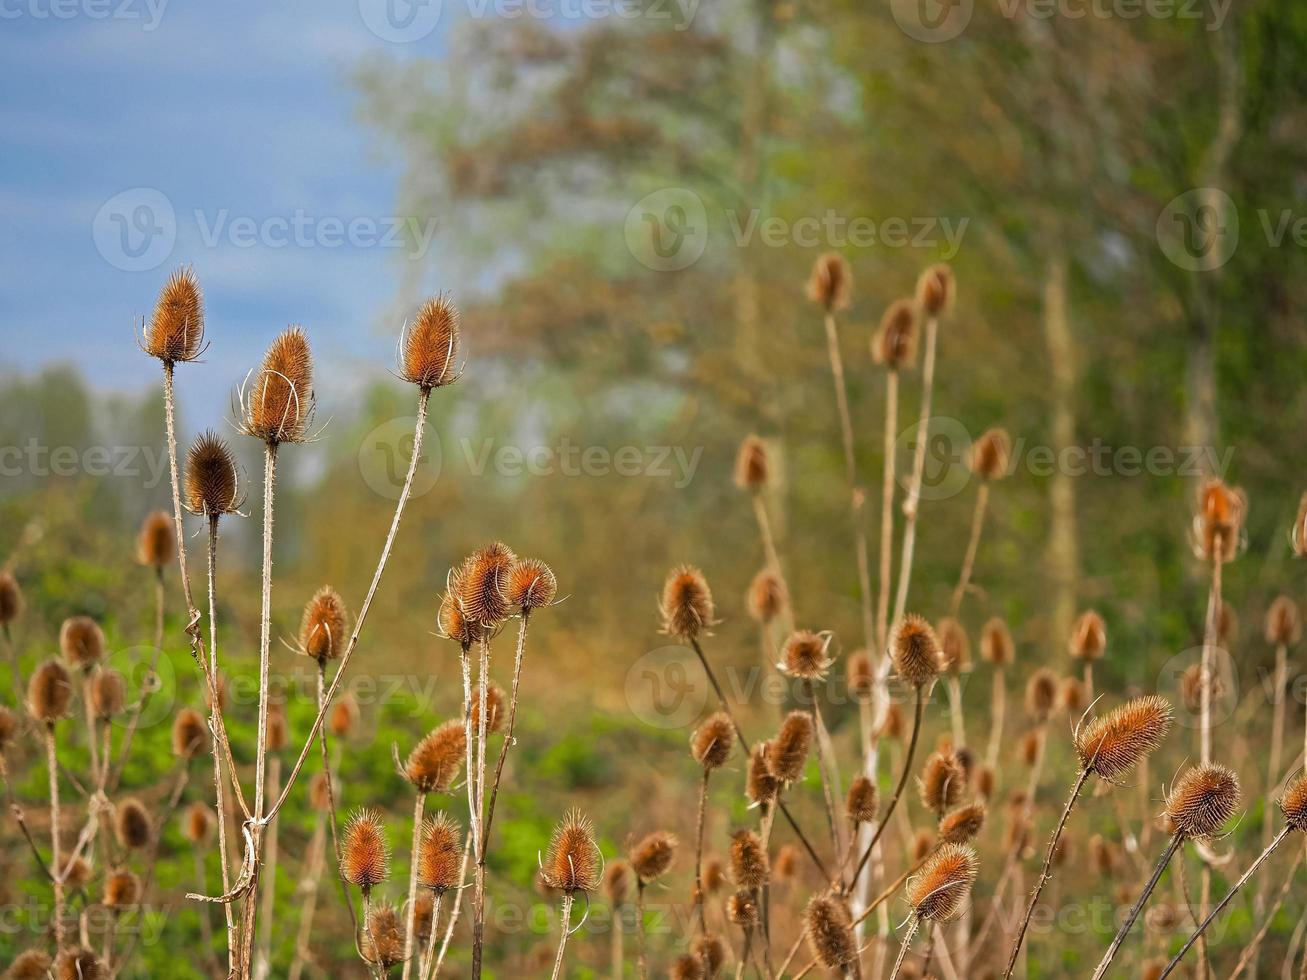 teasels na reserva natural comum de barlow, yorkshire norte, inglaterra foto